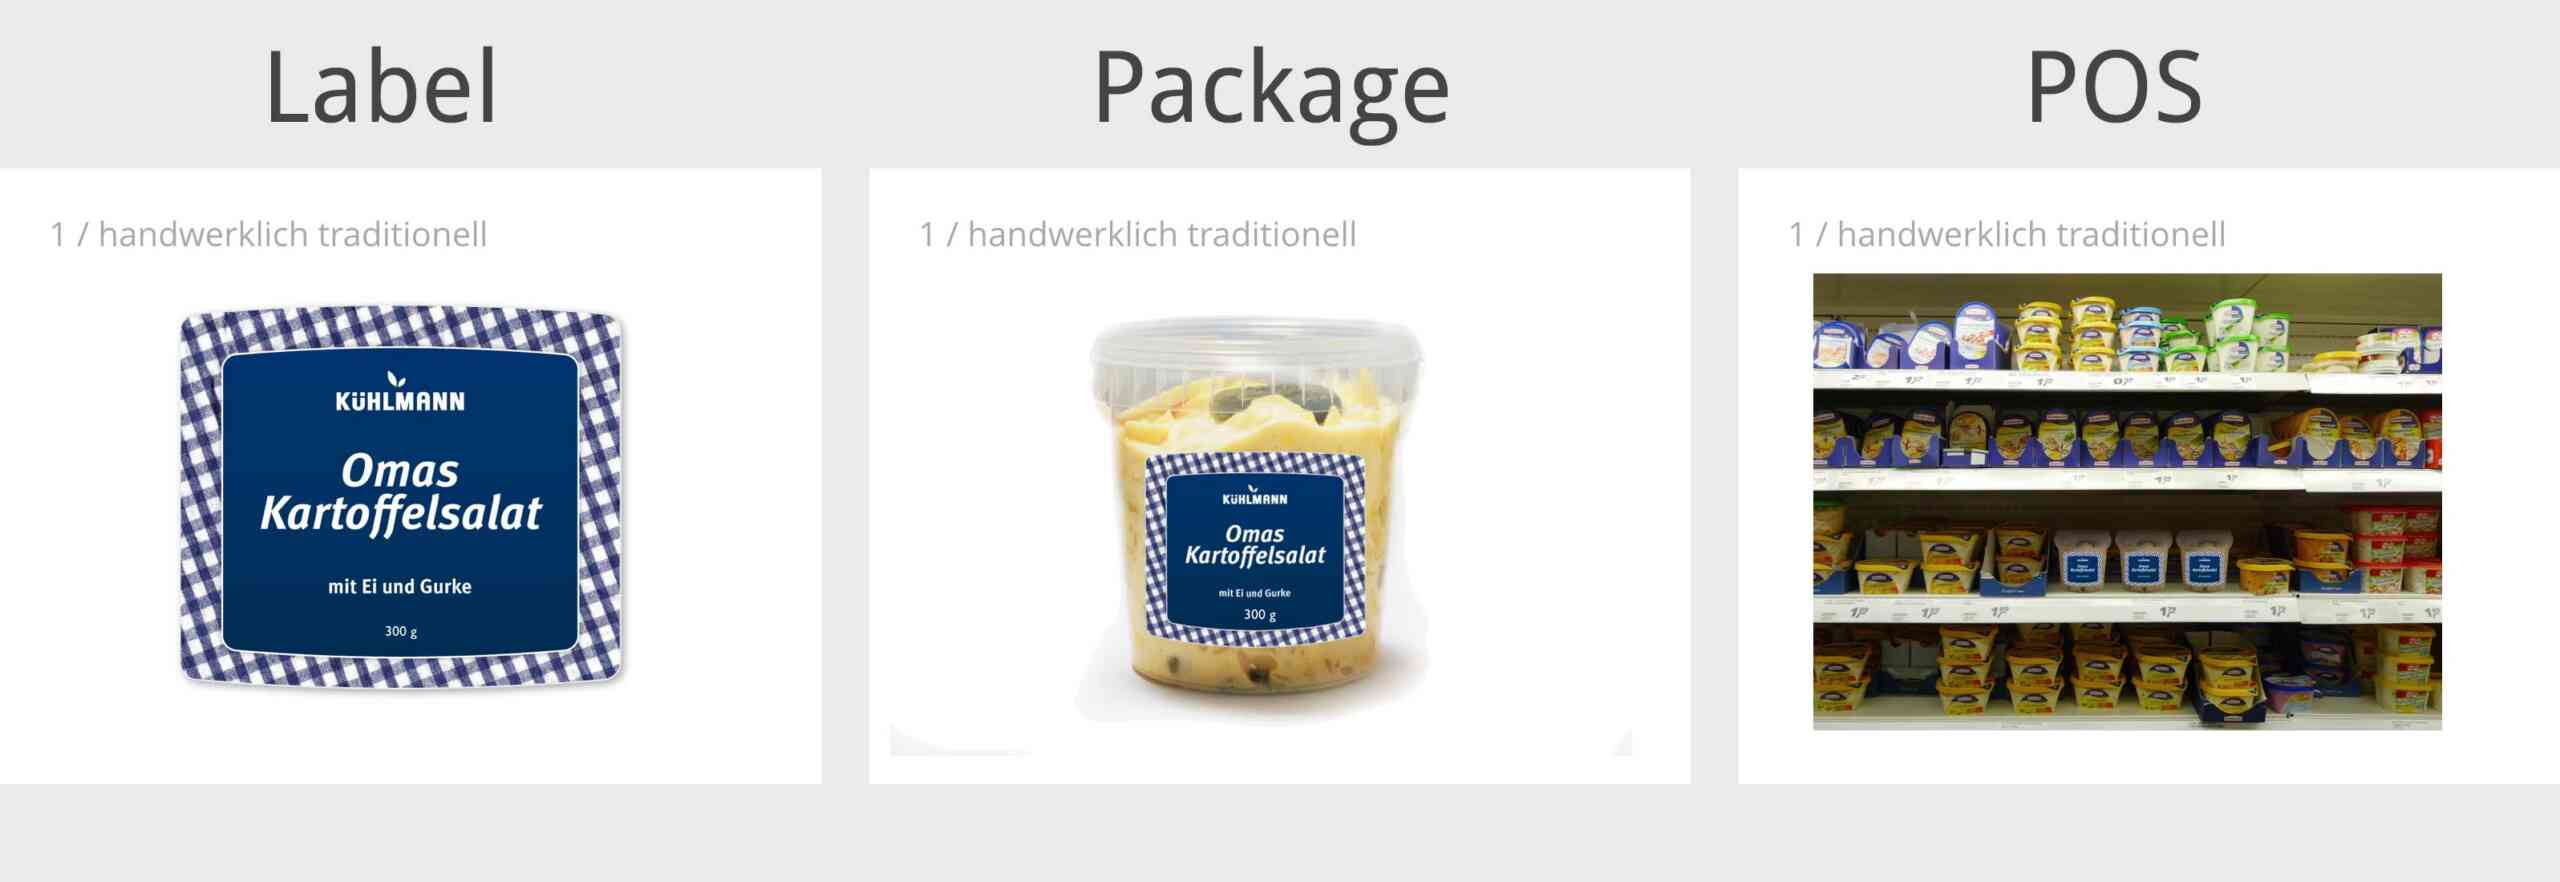 Package Design SB-Handel